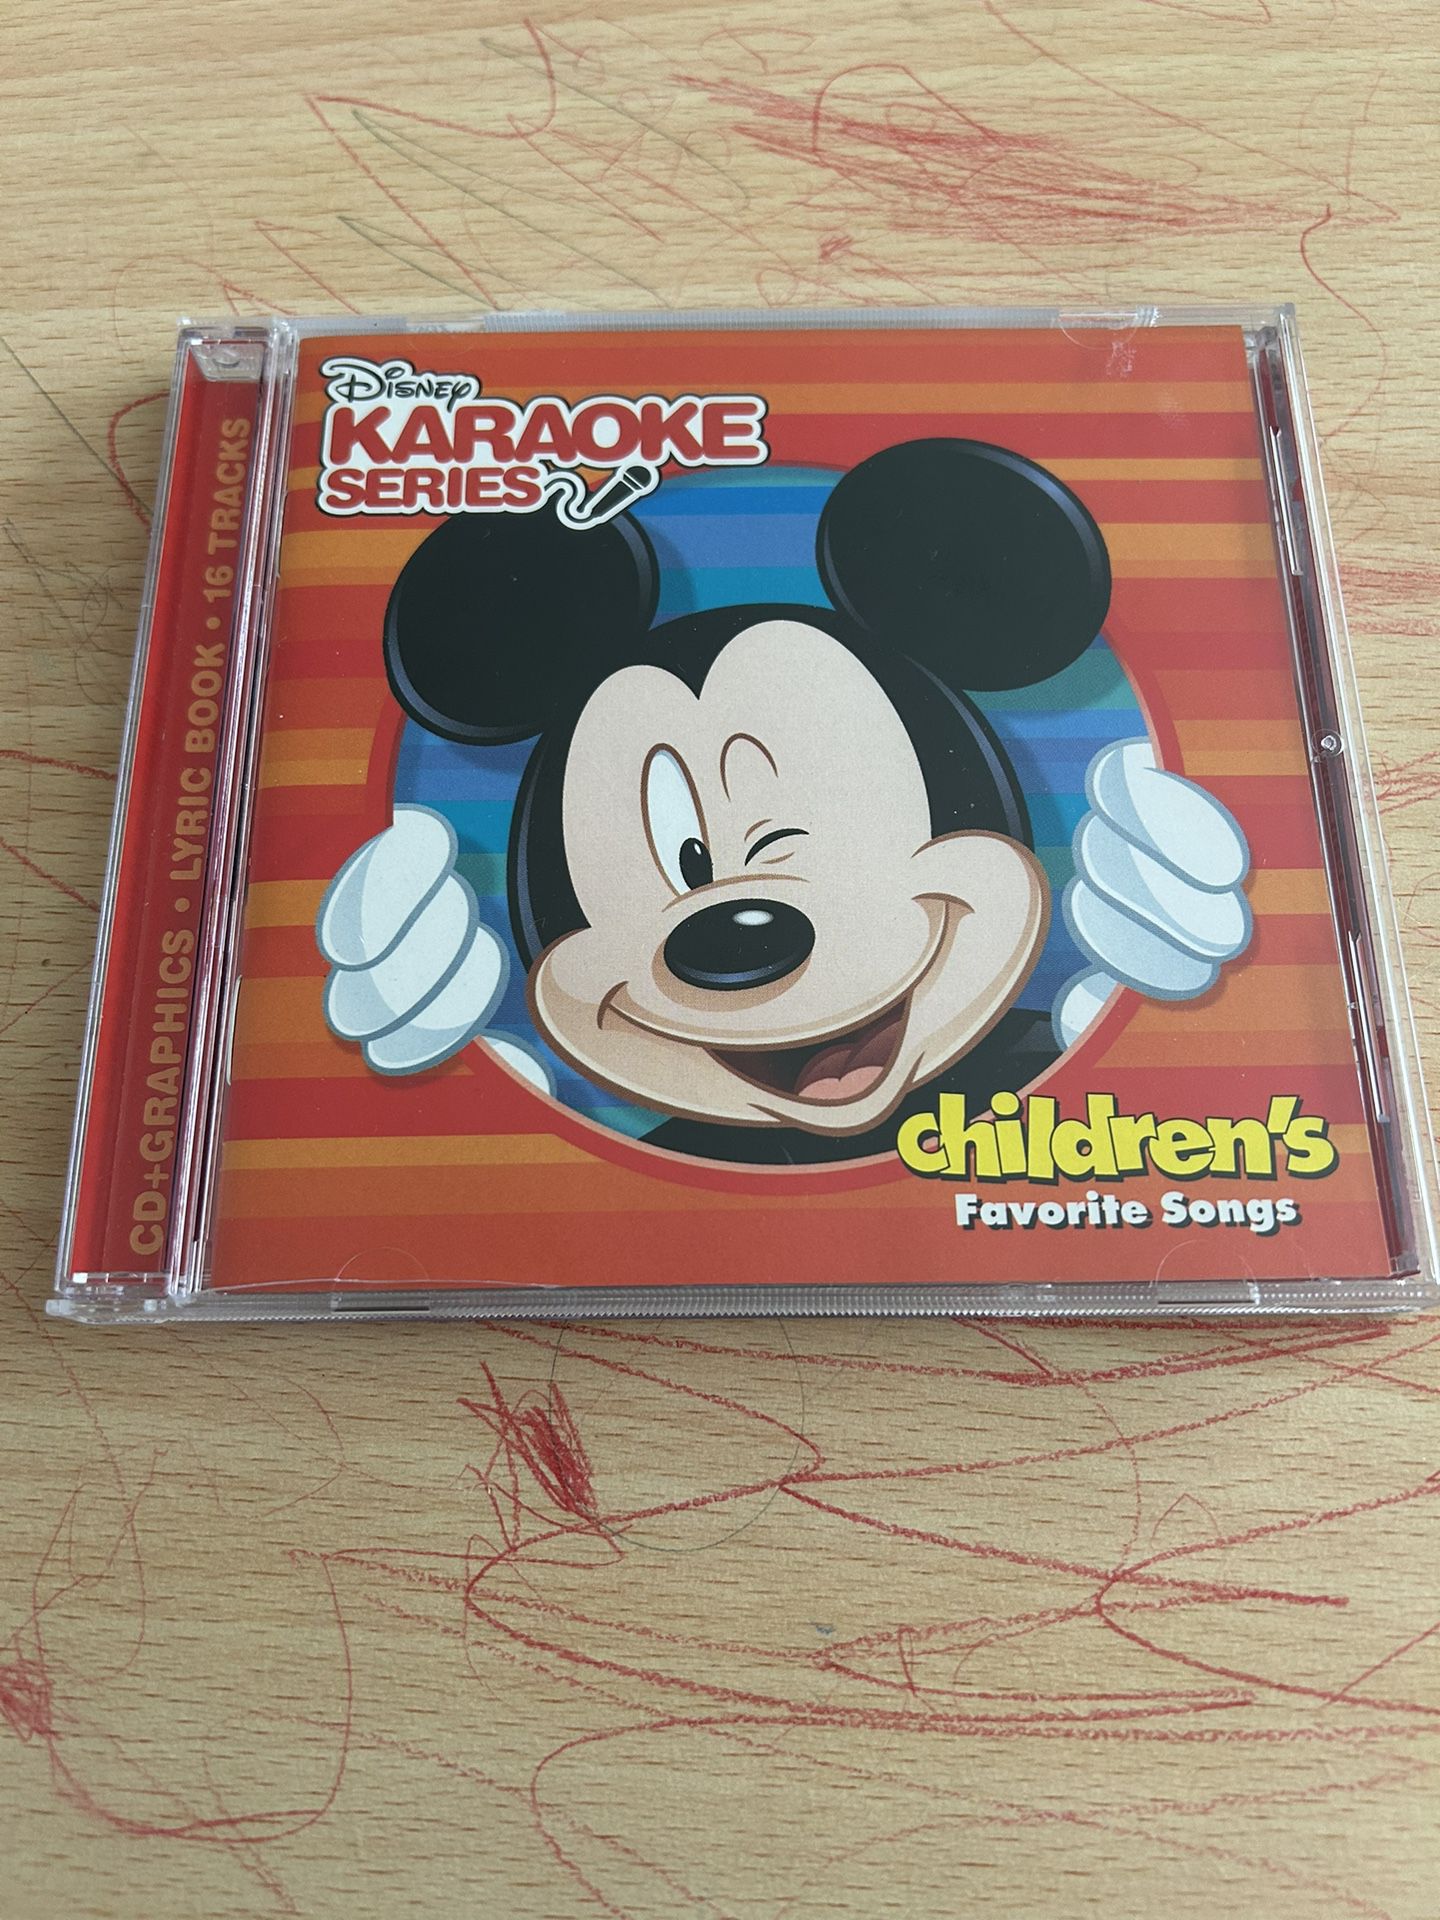 Disney's Karaoke Series: Children's Favorite Songs by Disney's Karaoke